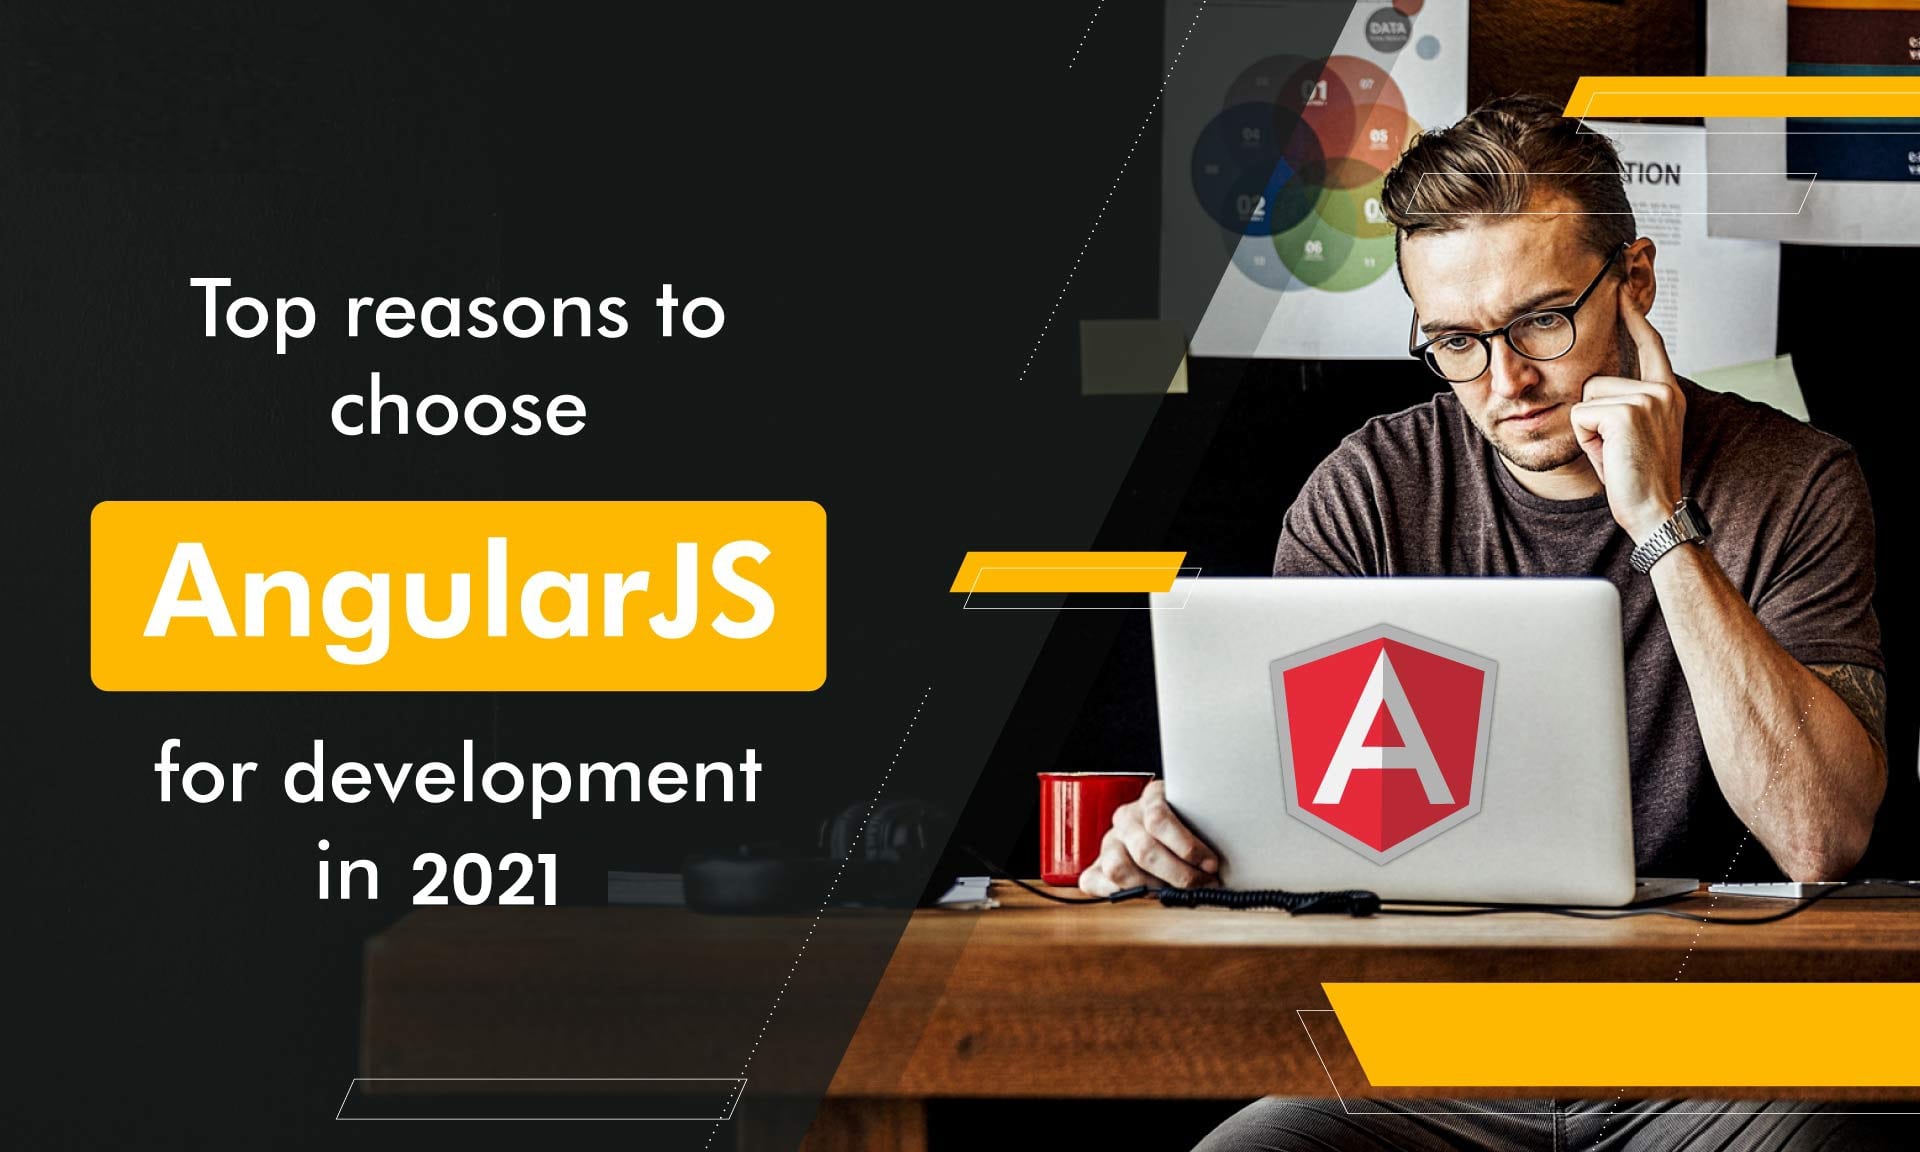 AngularJS is the best for Web Development